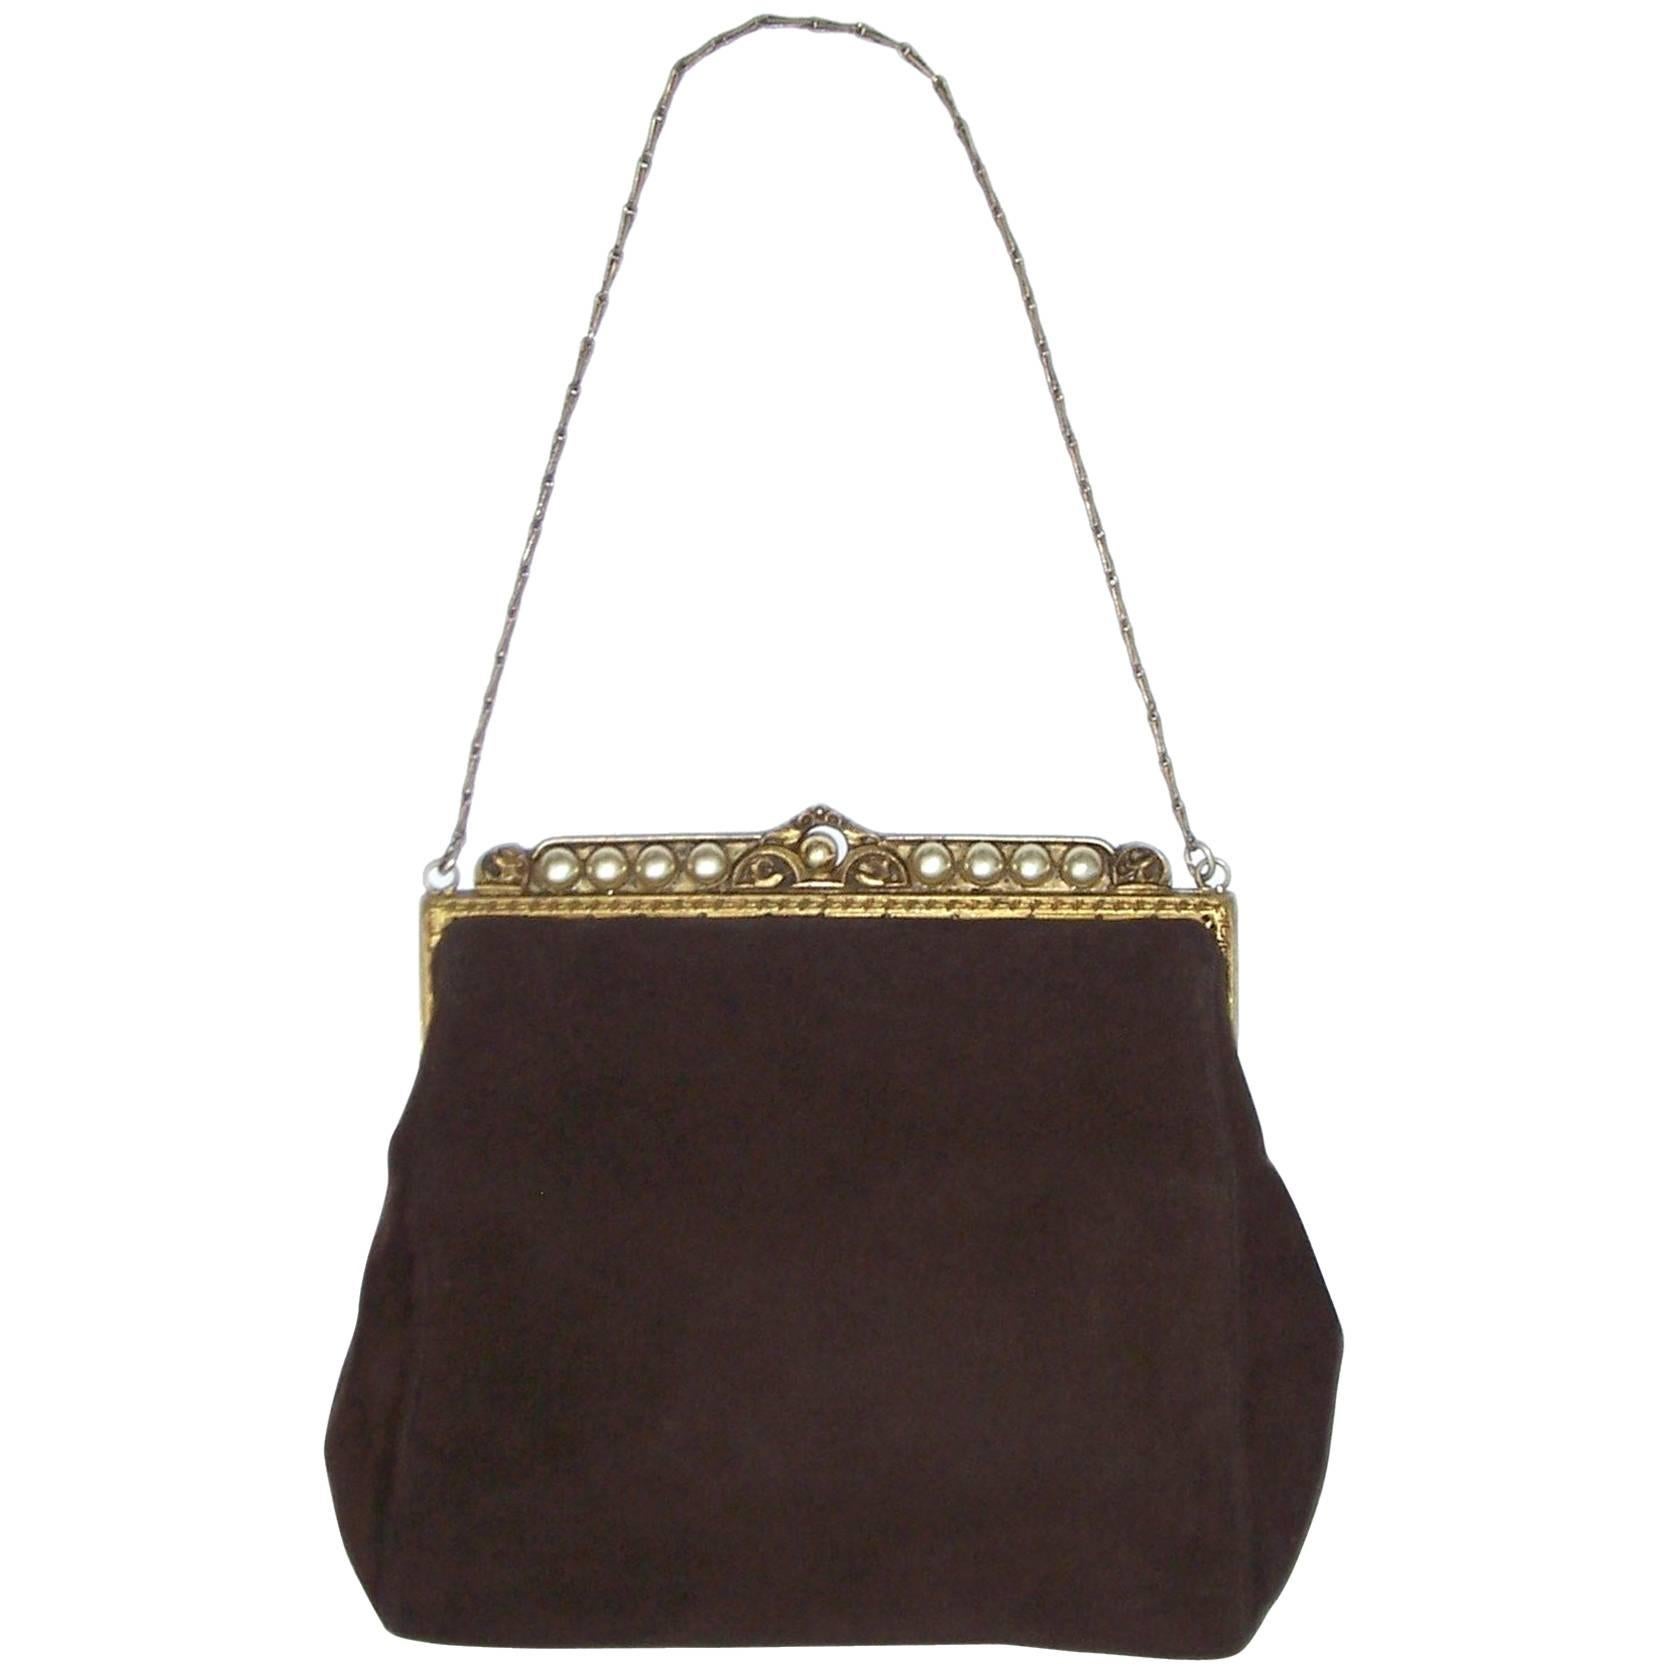 1930 Dara Round Bag - Orange – Yula Luxury Hand Bags and Accessories